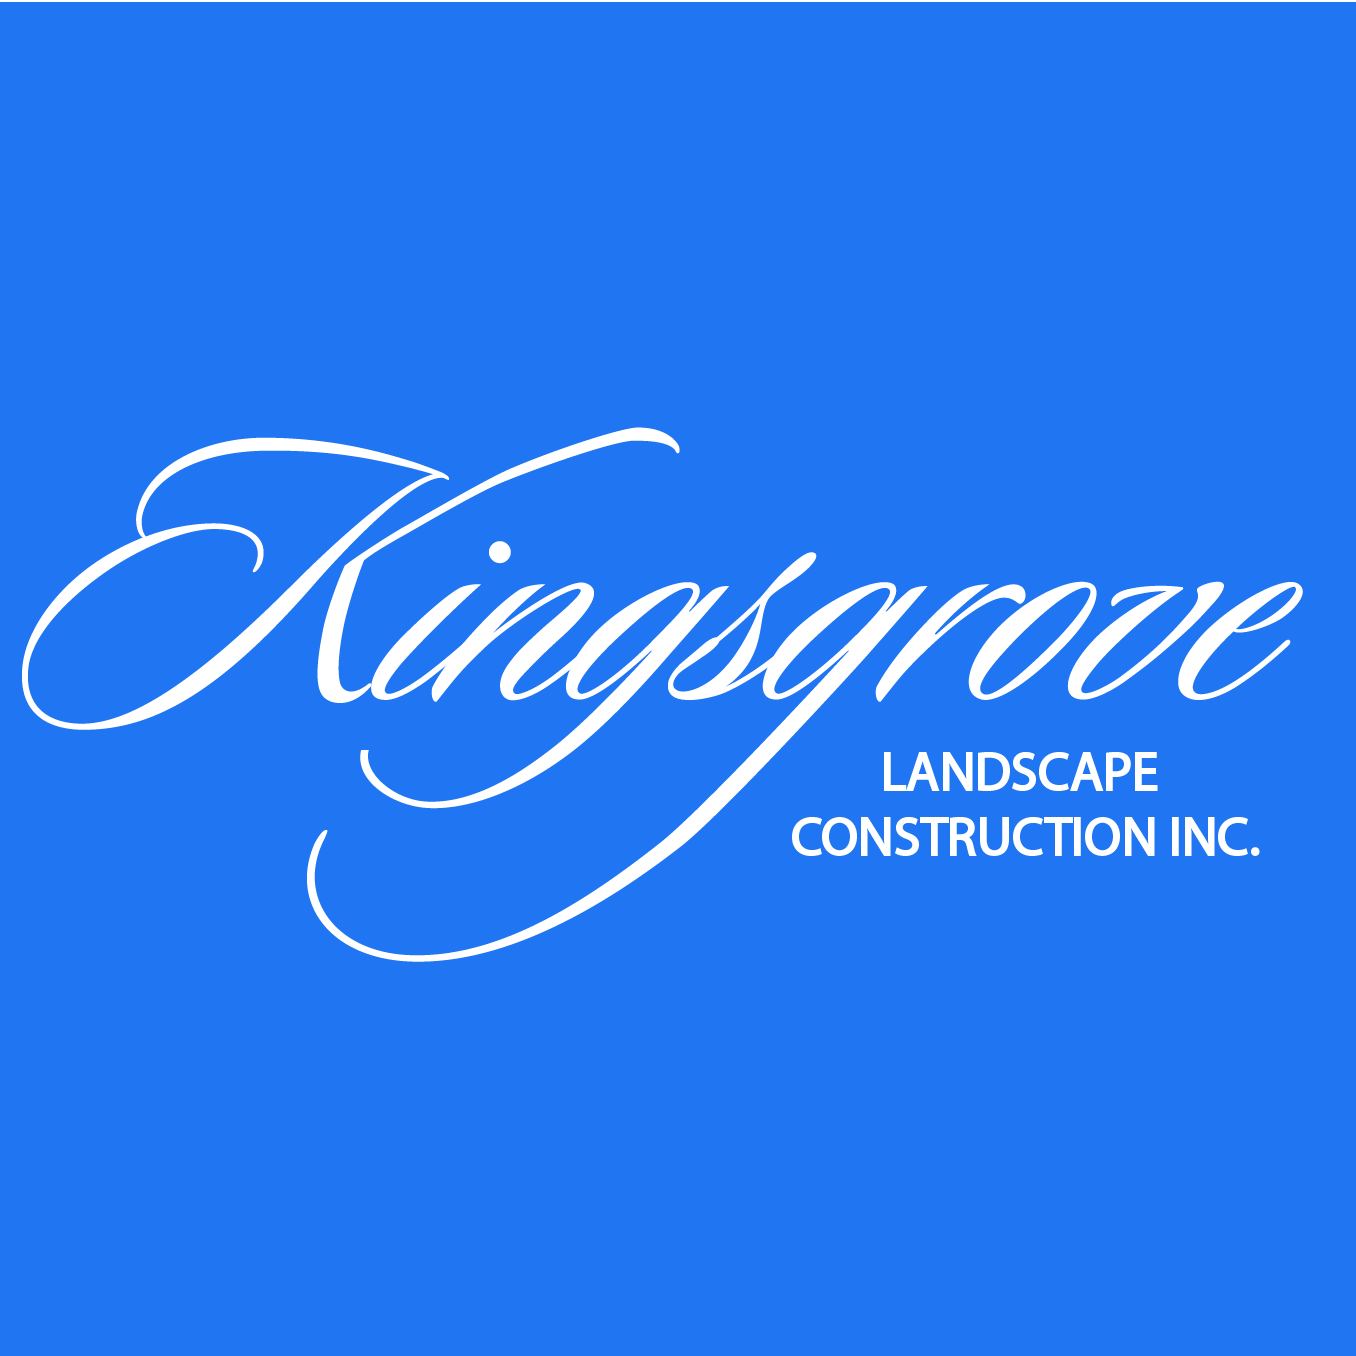 Kingsgrove Landscape Construction Inc.'s logo